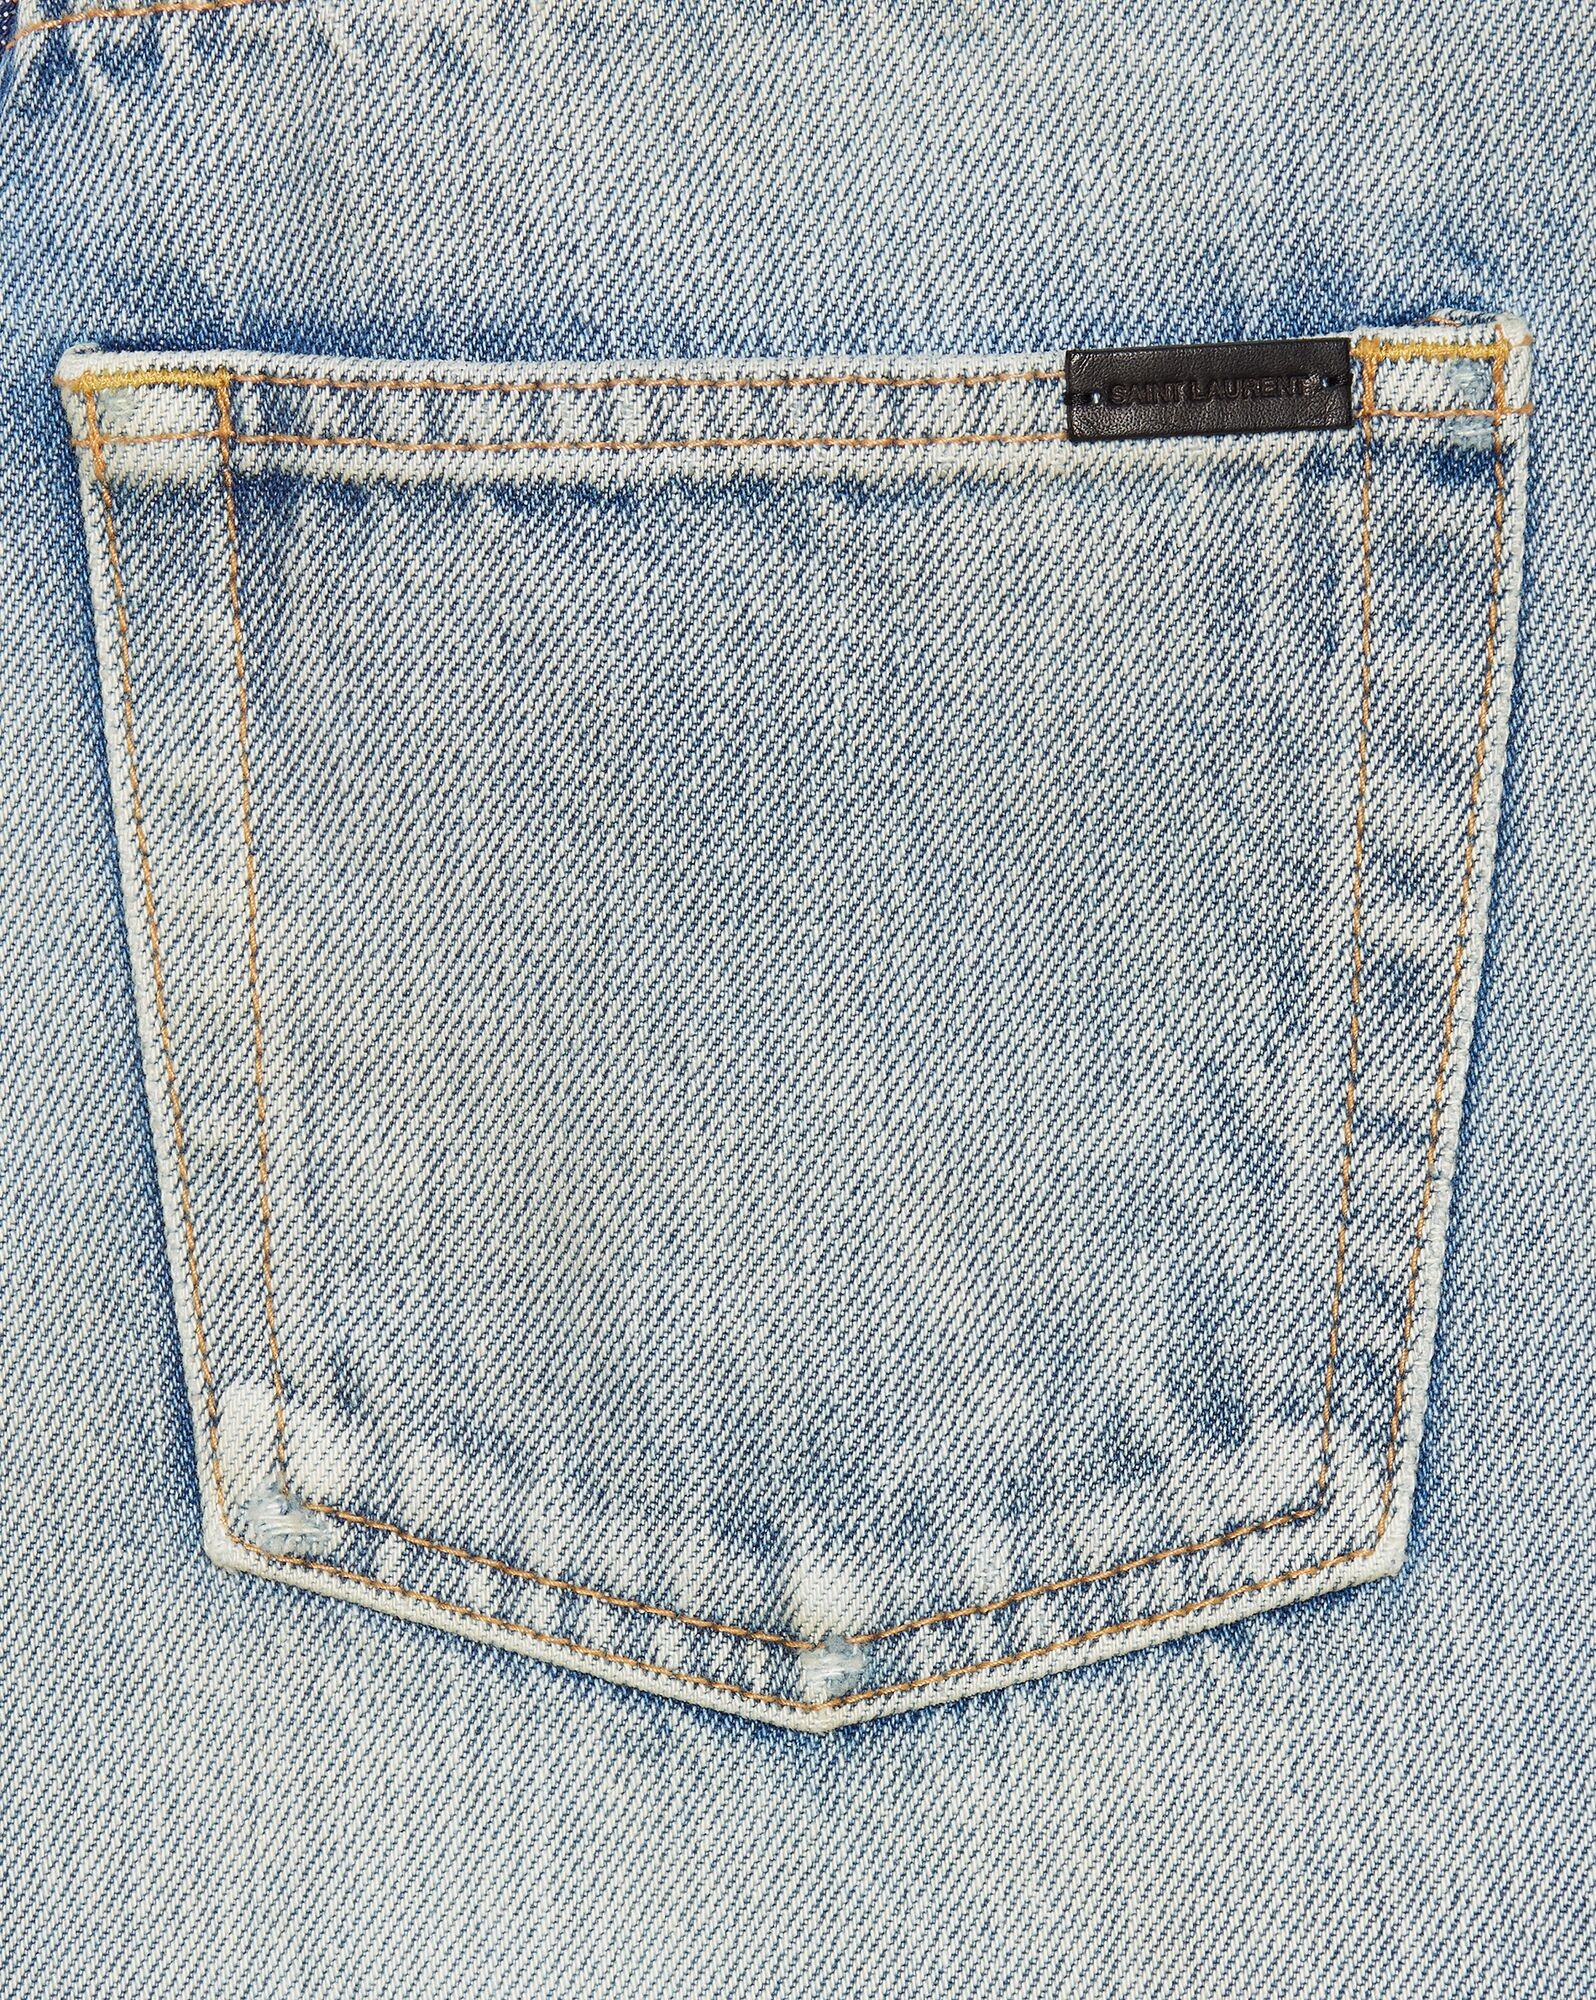 Skinny-fit jeans in 80's vintage blue stretch denim | Saint Laurent ...